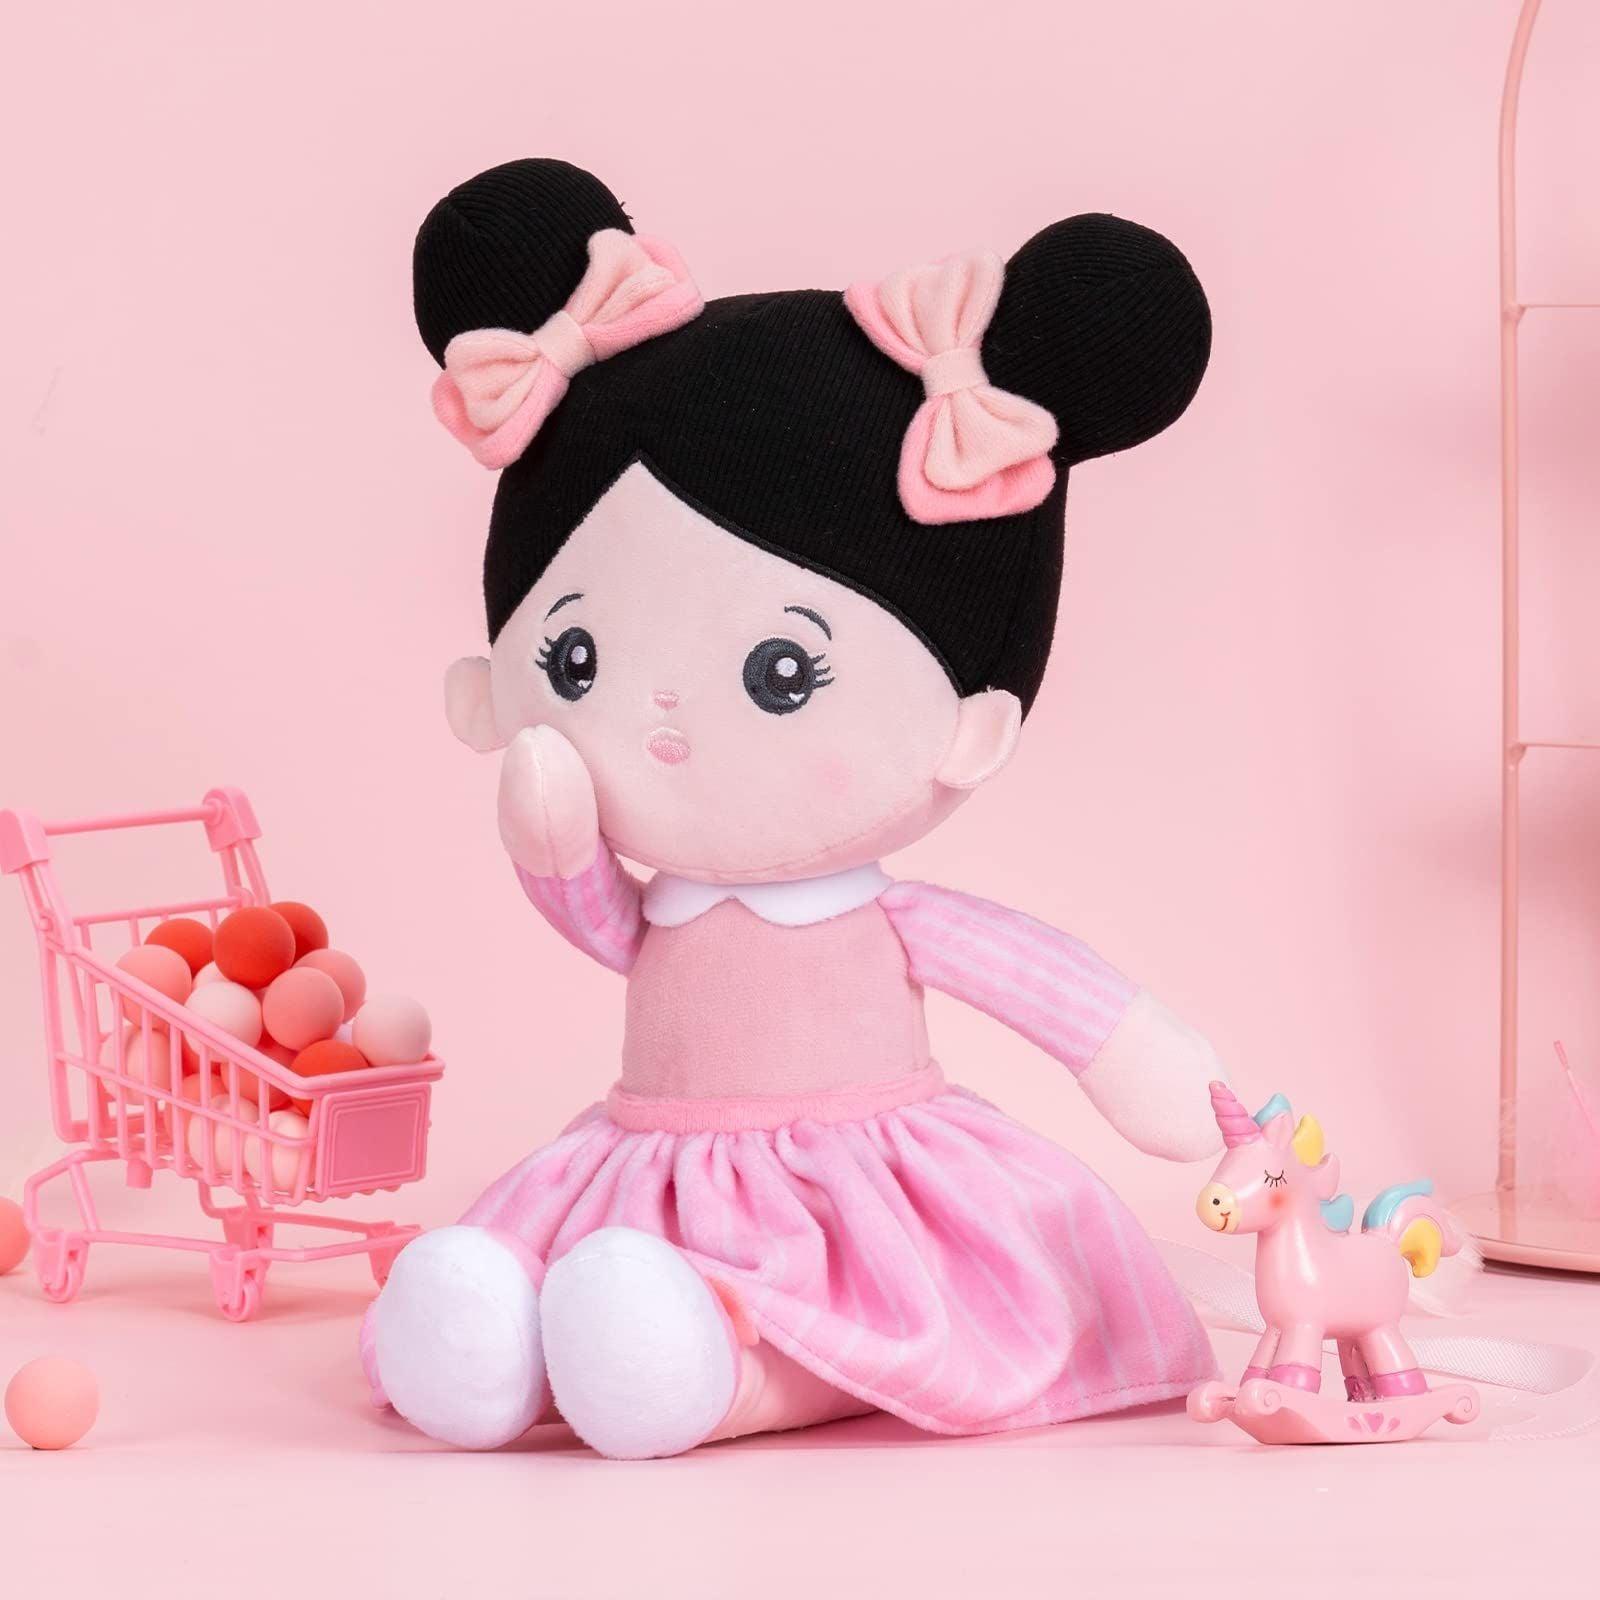 Starpony OUOZZZ 15'' Baby Dolls Girls Gifts Plush Soft Rag Toy for 1 Year Old Kids 1